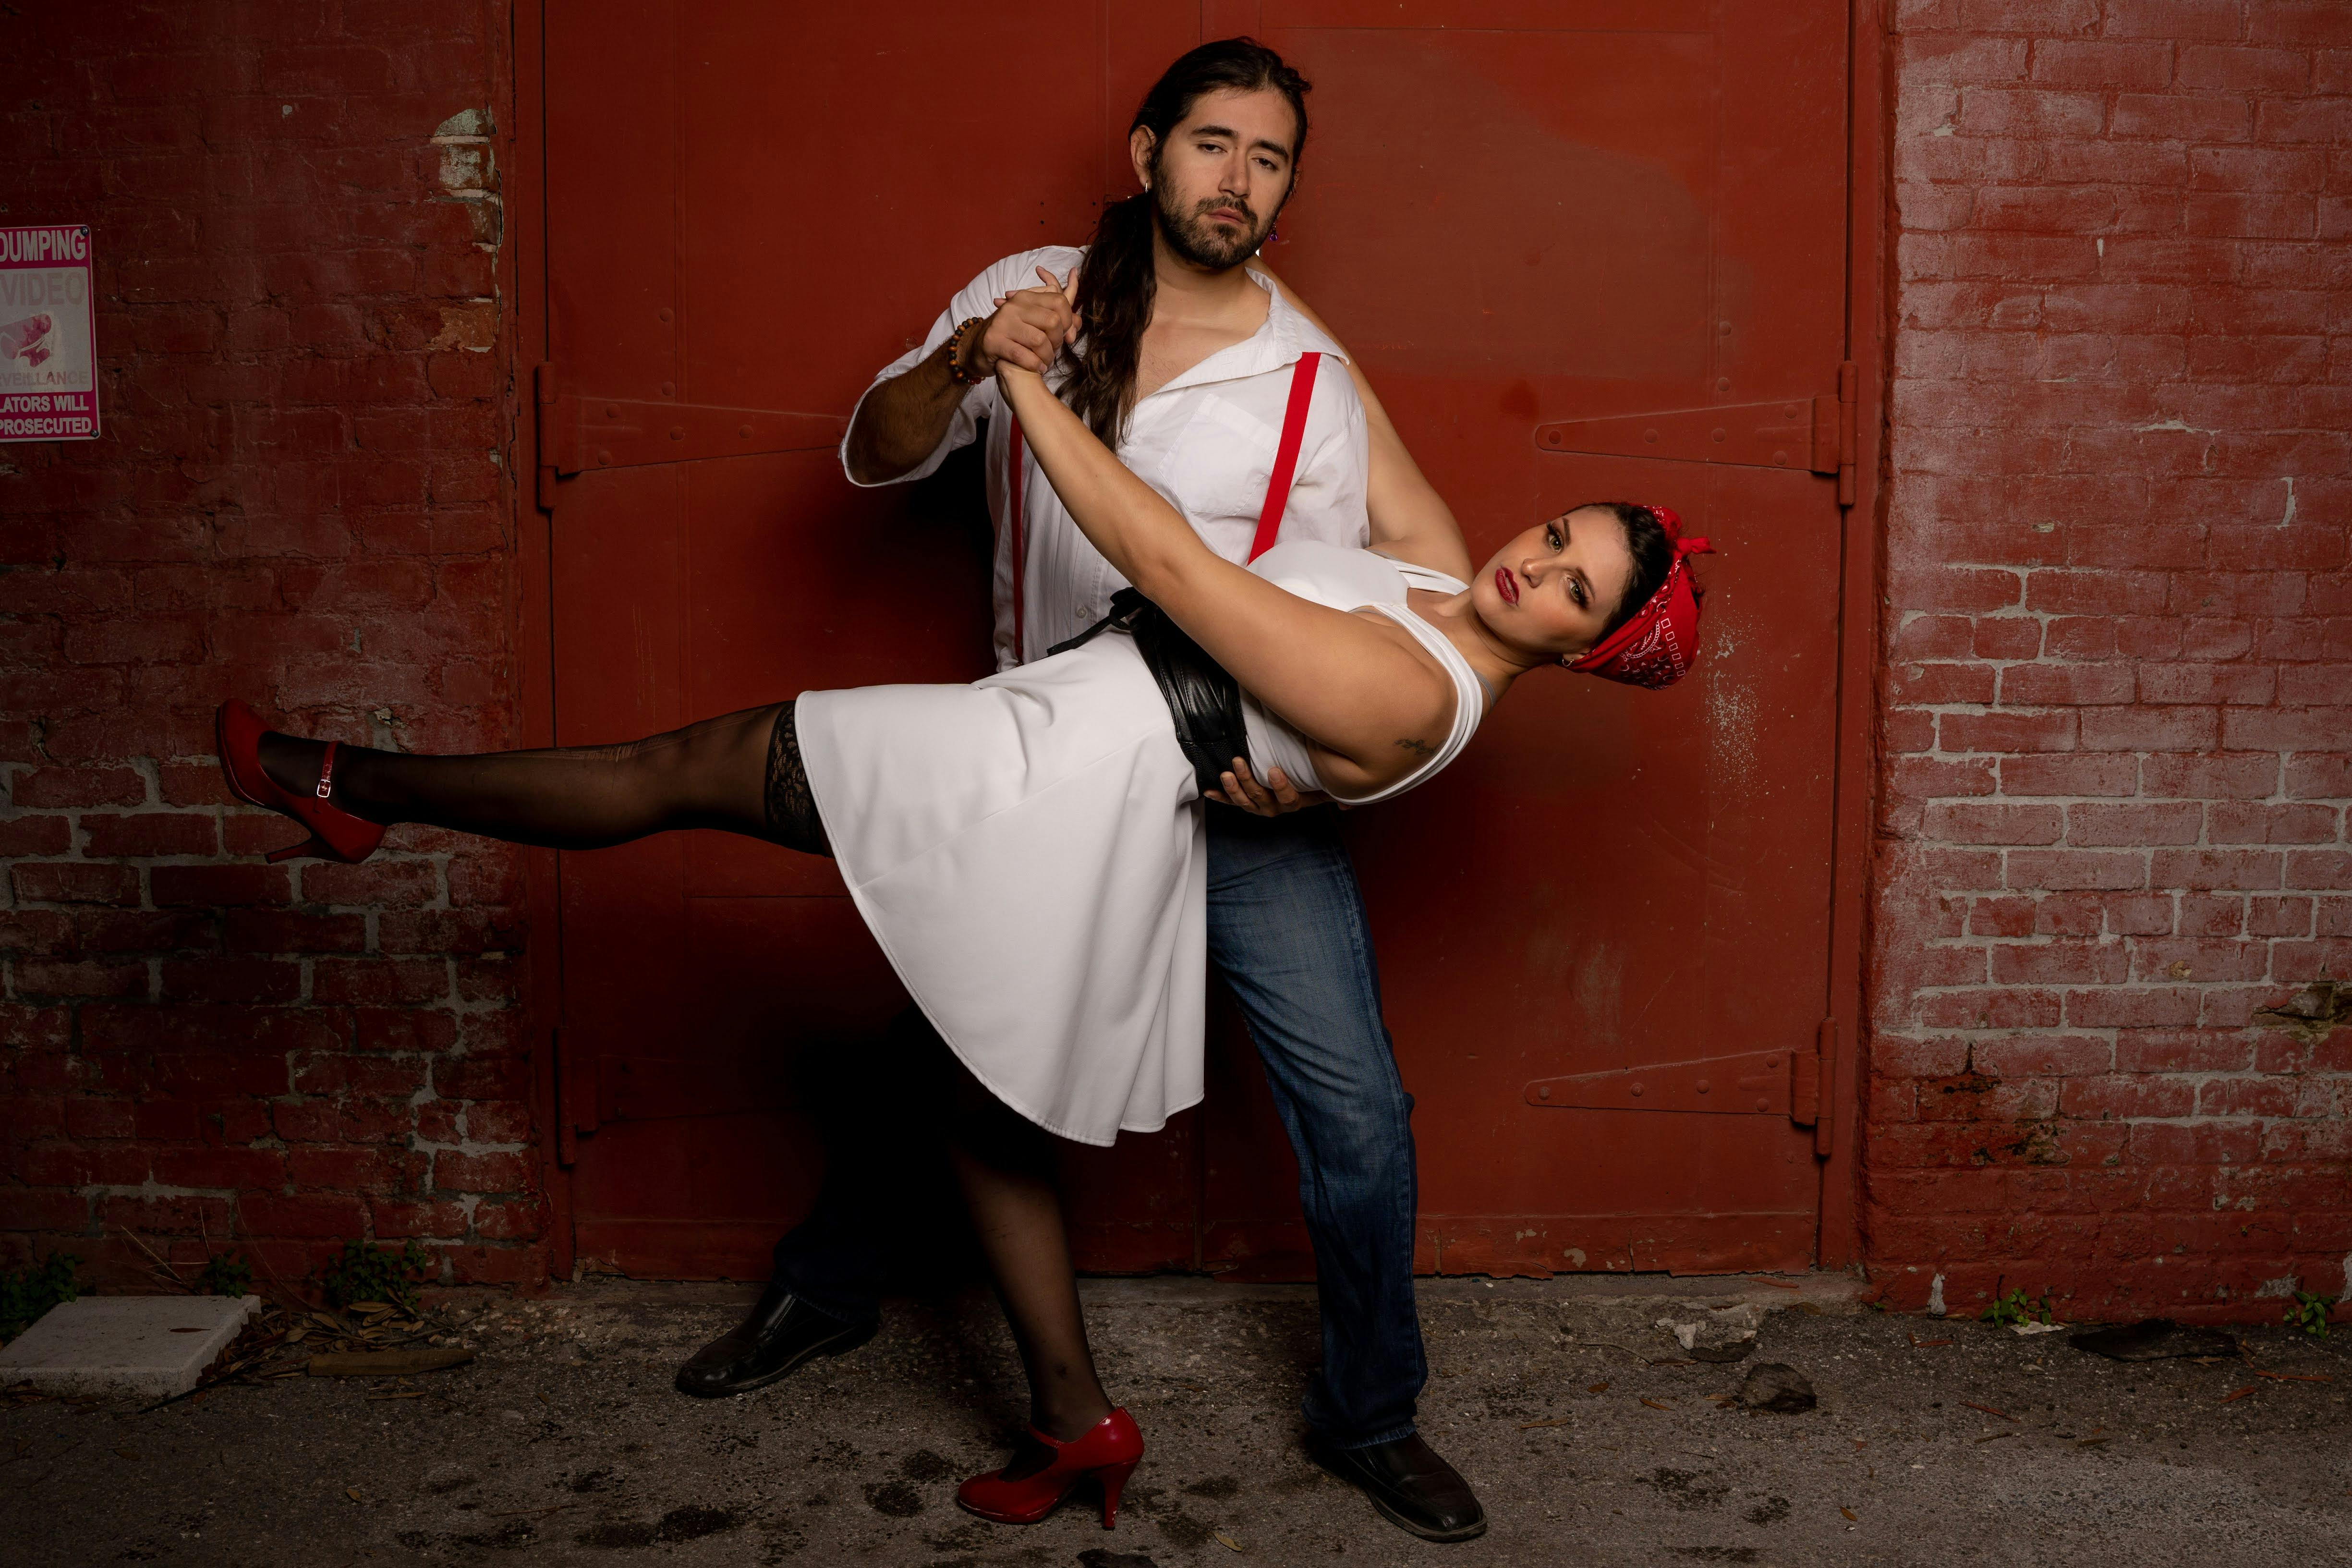 Couple Dancing Pose Image & Photo (Free Trial) | Bigstock